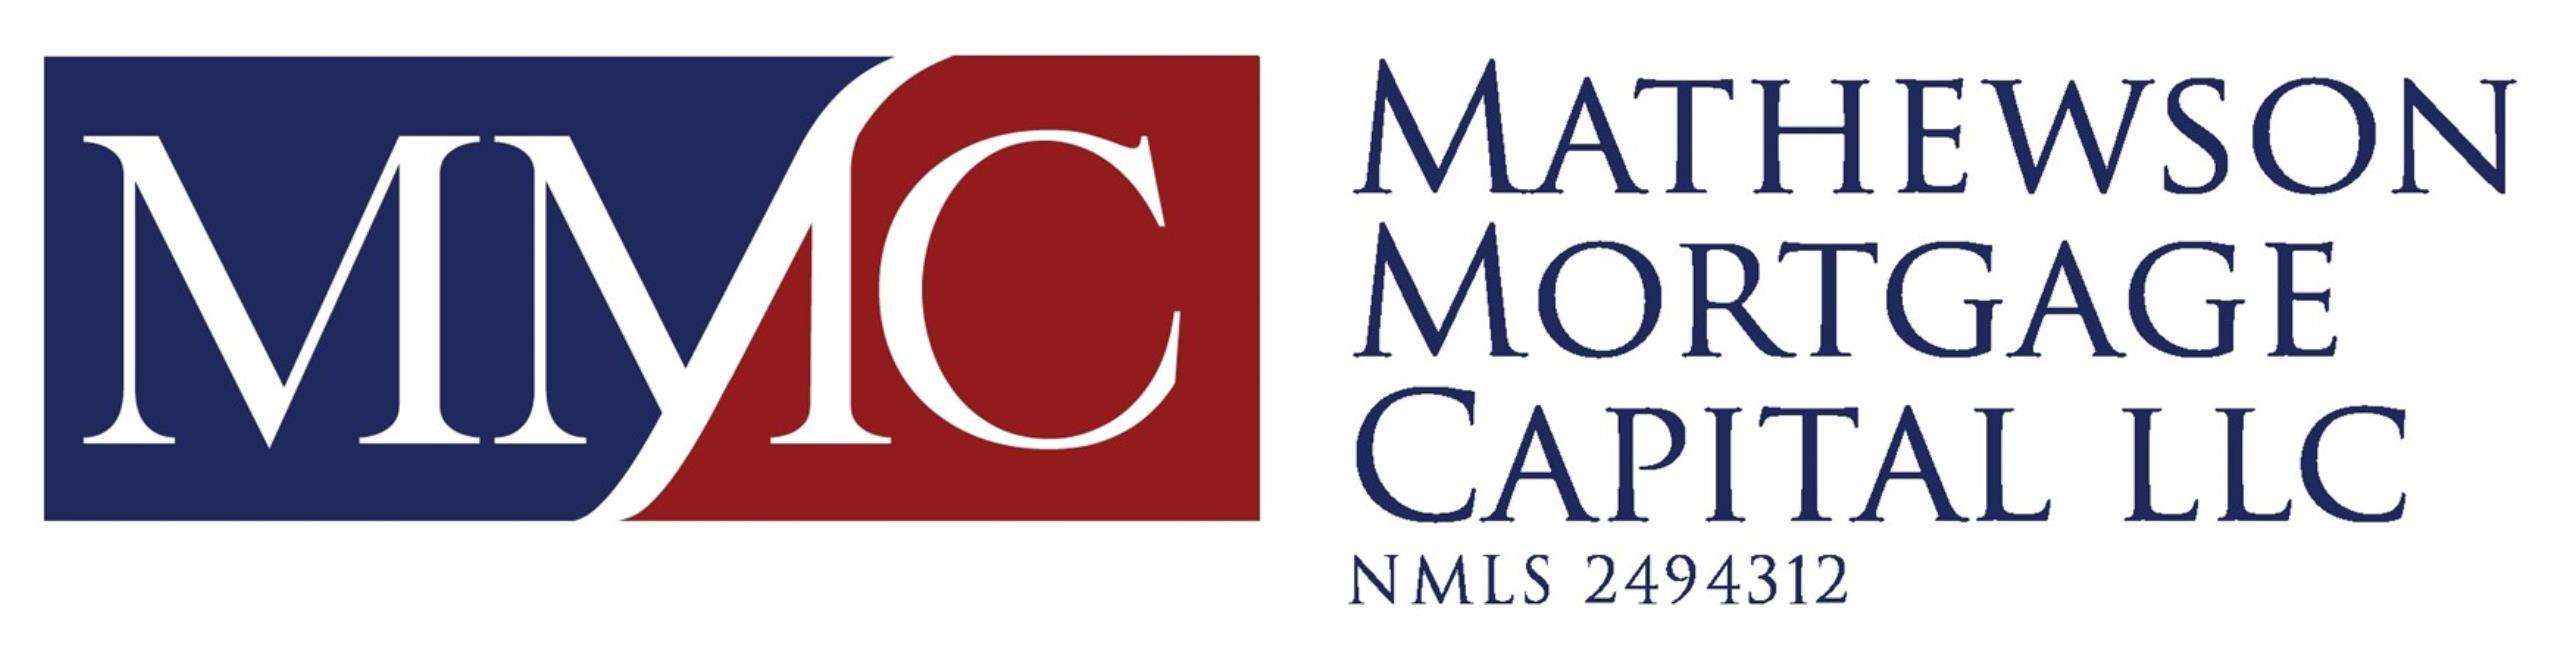 Mathewson Mortgage Capital, LLC Logo